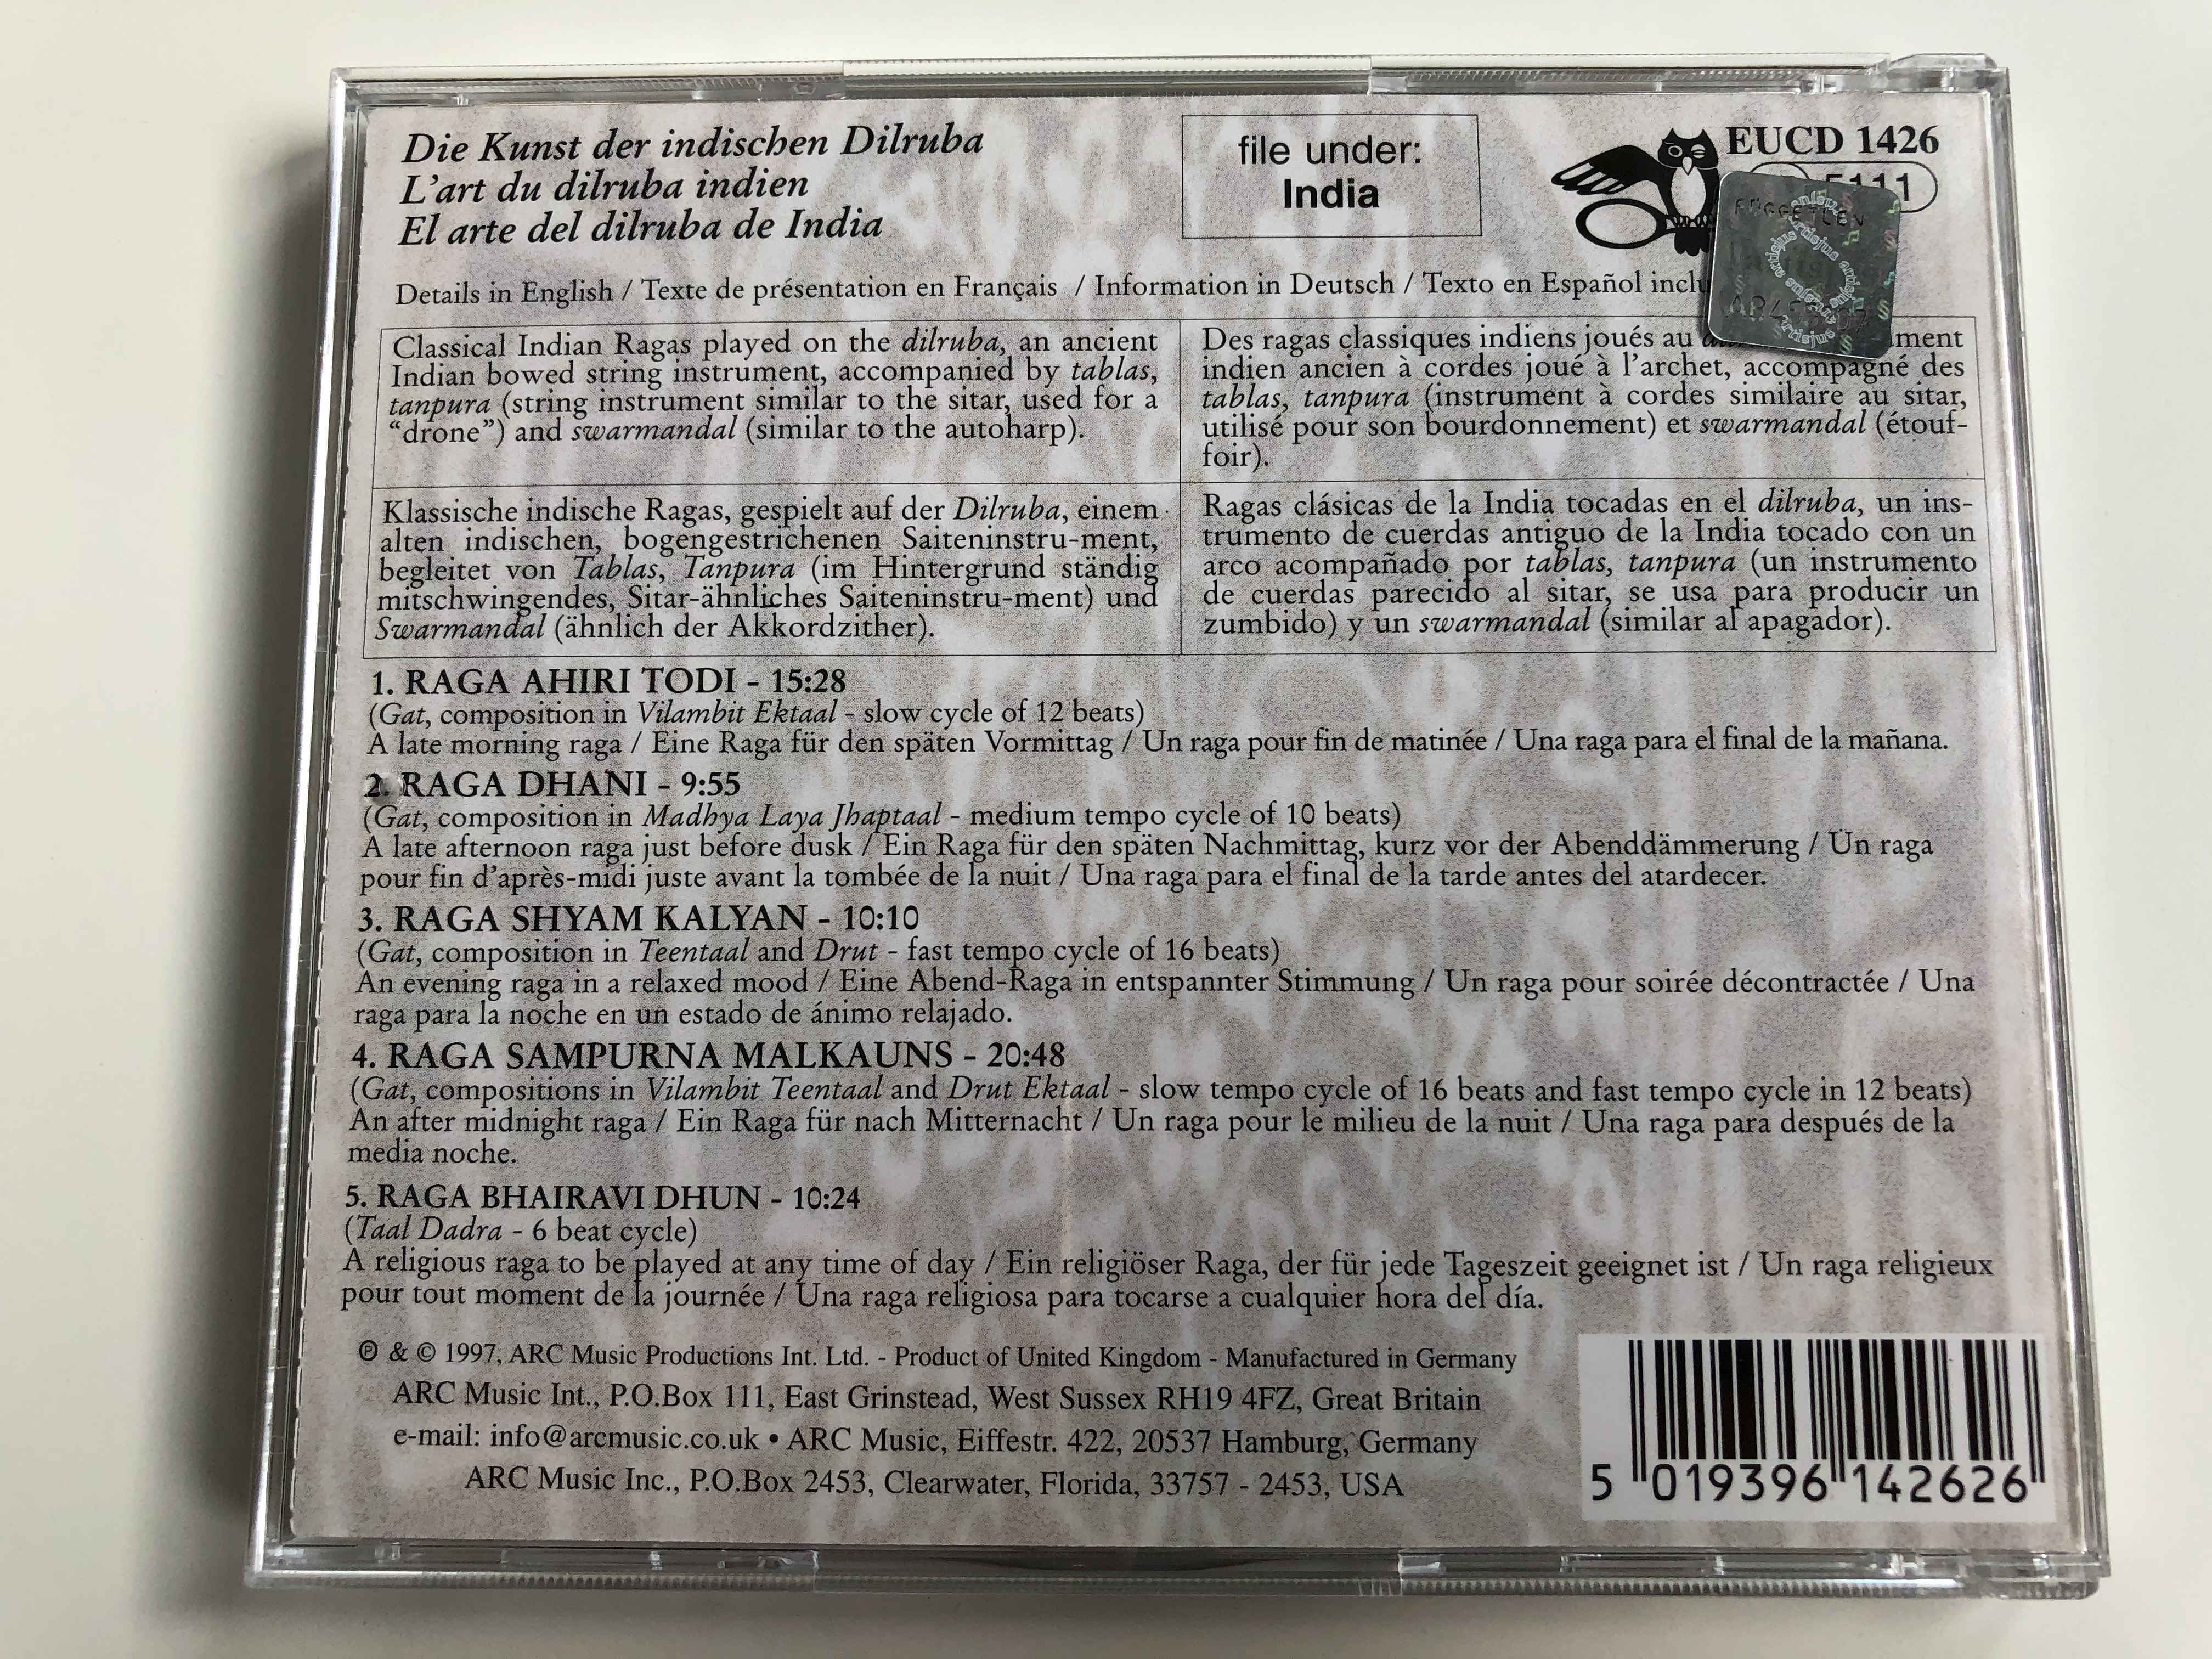 the-art-of-the-indian-dilruba-baluji-shrivastav-arc-music-audio-cd-1997-eucd-1426-6-.jpg